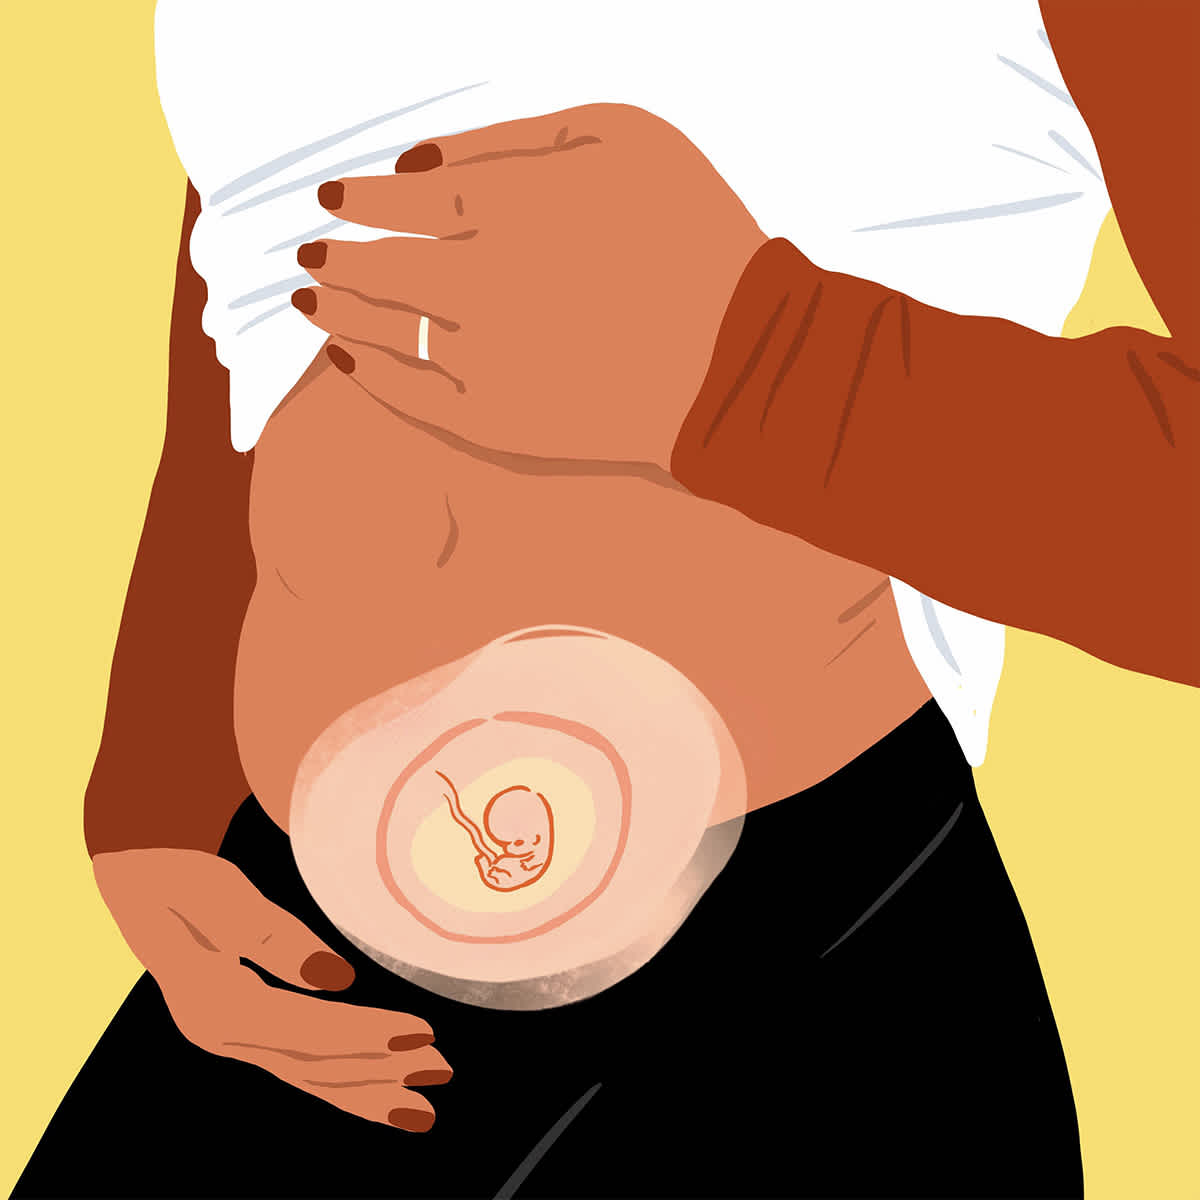 pregnant uterus 8 weeks